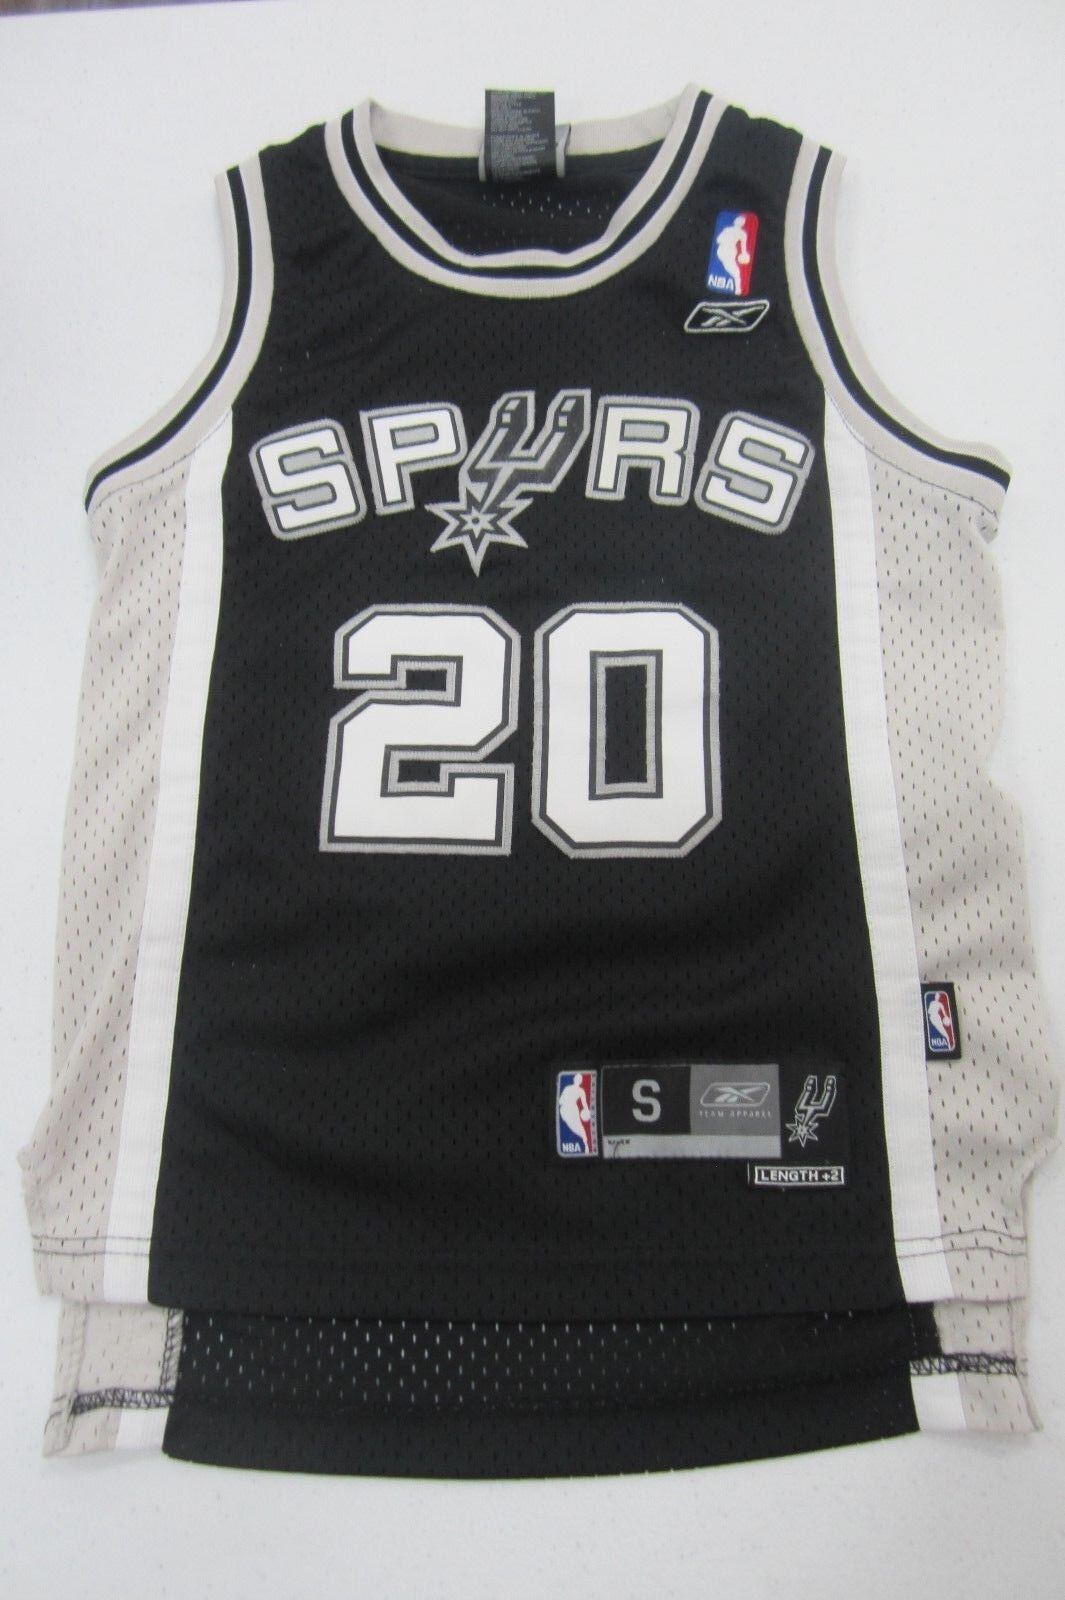 *NICE* San Antonio Spurs Manu Ginobili Reebok Sewn NBA Basketball Jersey Youth S